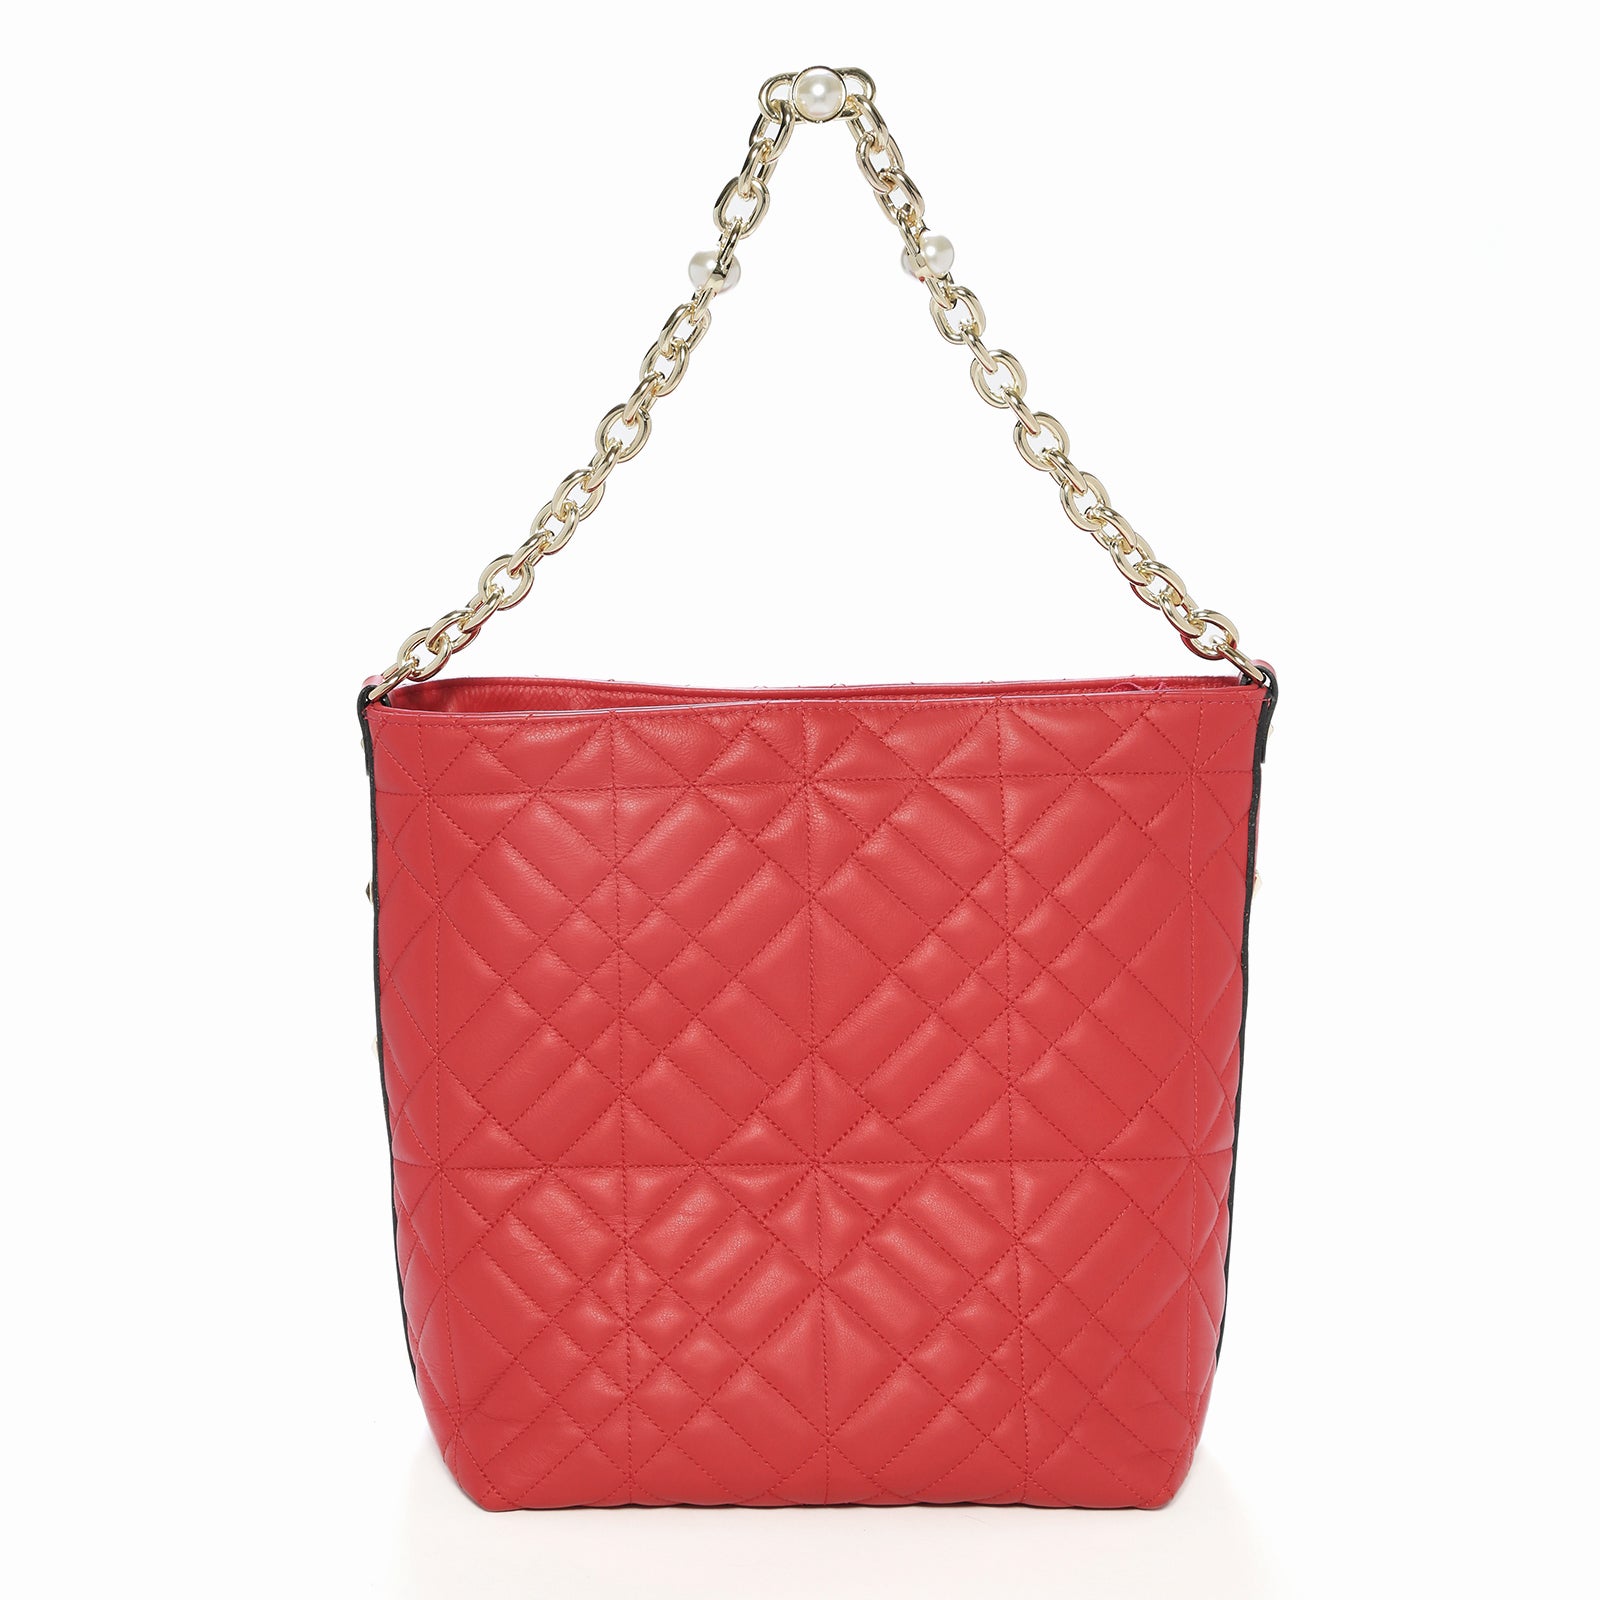 Zara Bag NEW never worn. Shoulder Chain Red Handbag Leather Quilted Evening  | Red handbag, Zara bags, Shoulder chain